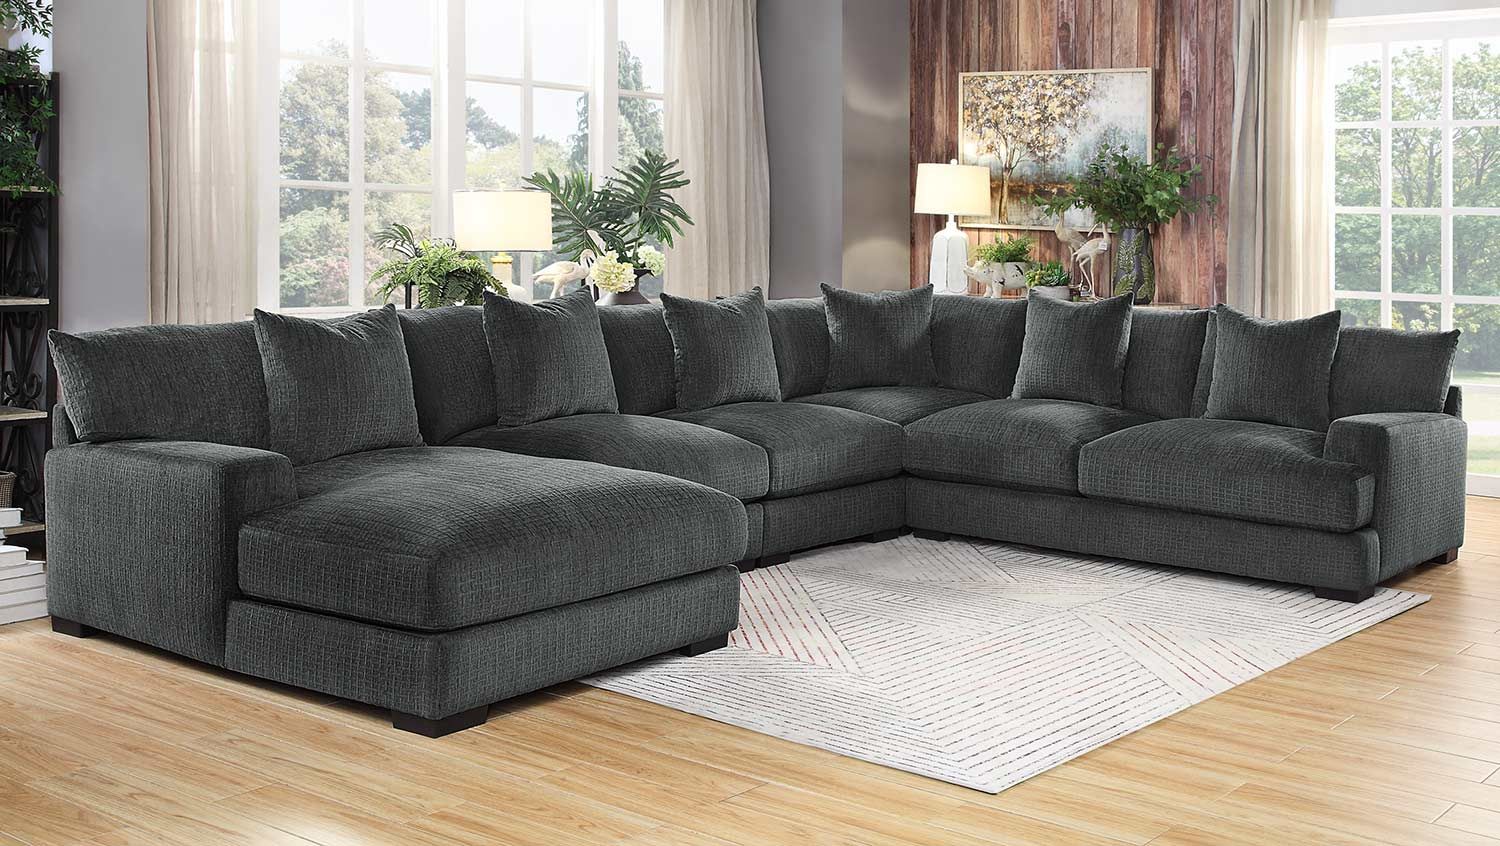 Homelegance Worchester Sectional Sofa Set – Dark Gray 9857dg Sofa Set Regarding Sofas In Dark Grey (Gallery 6 of 20)